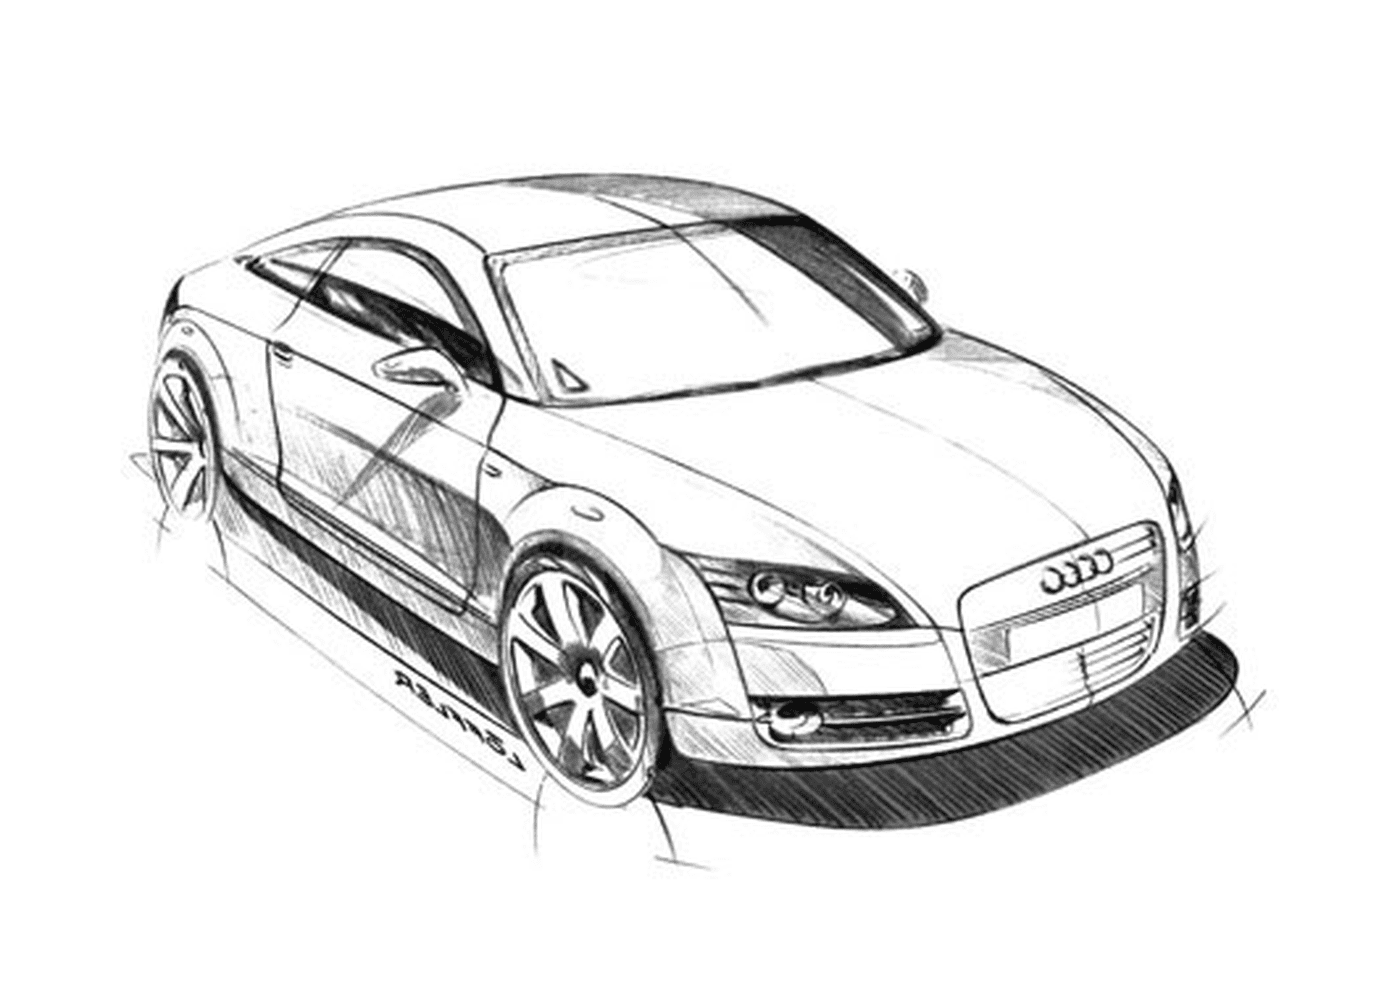  Audi Auto Image, Audi Auto 